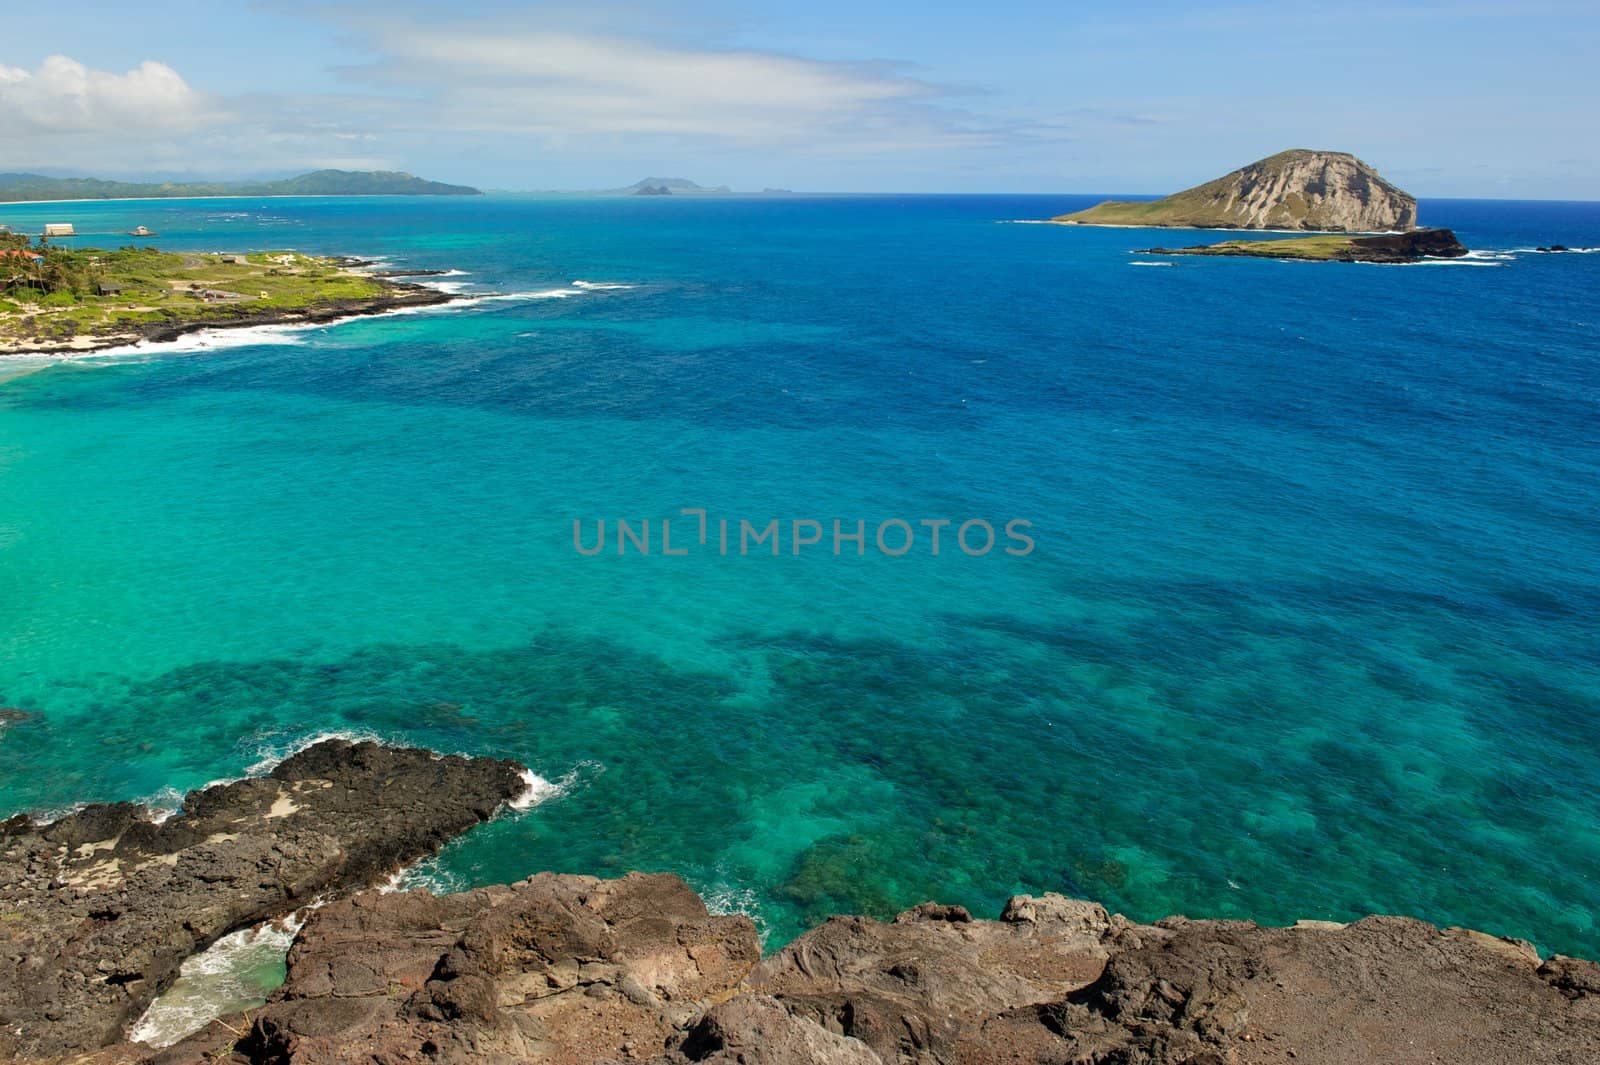 Pacific Ocean Water Off the Coast of Oahu in Hawaii by pixelsnap